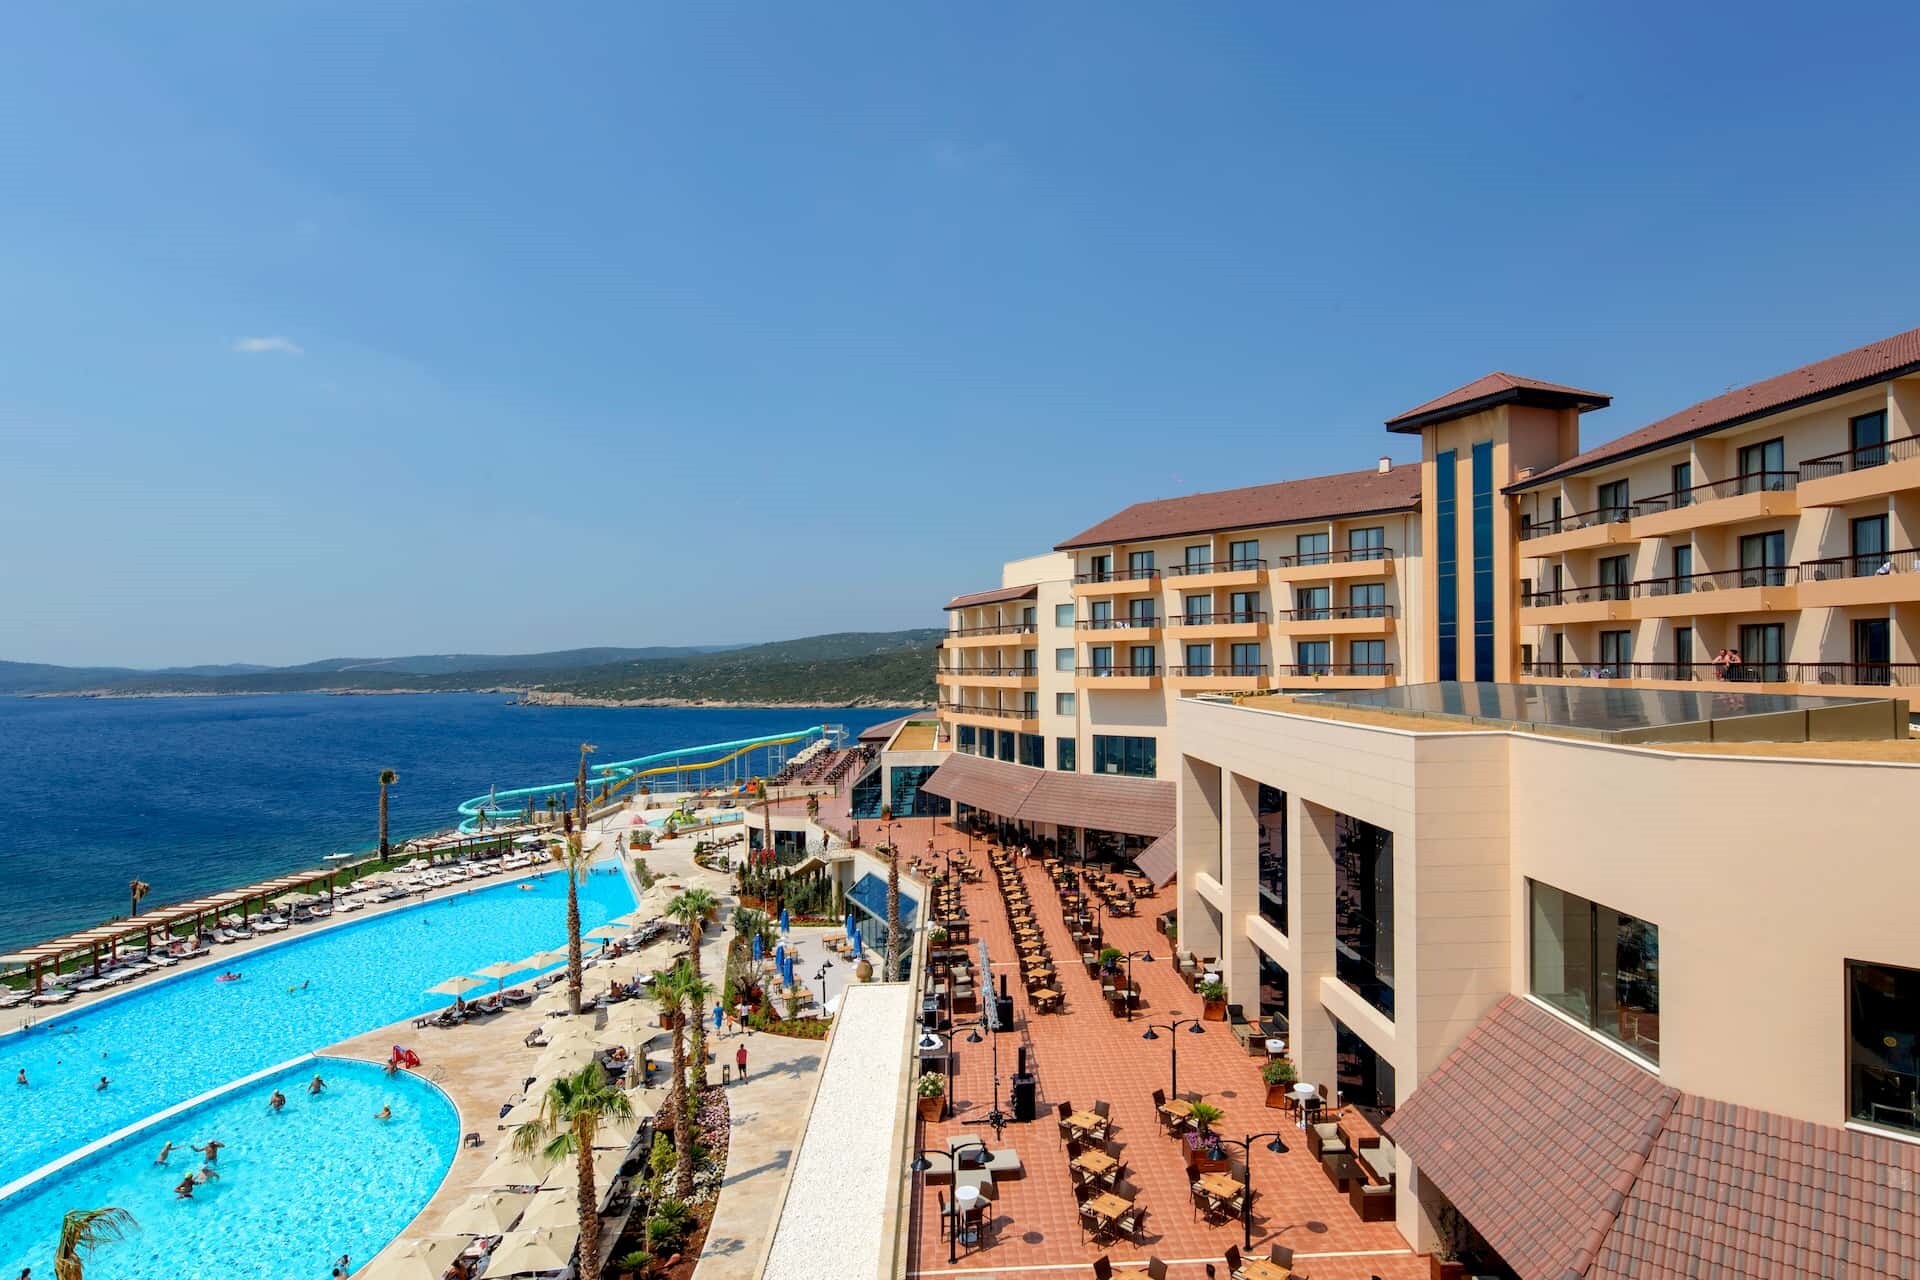 EUPHORIA AEGEAN RESORT AND THERMAL HOTEL – Standart Room Sea View